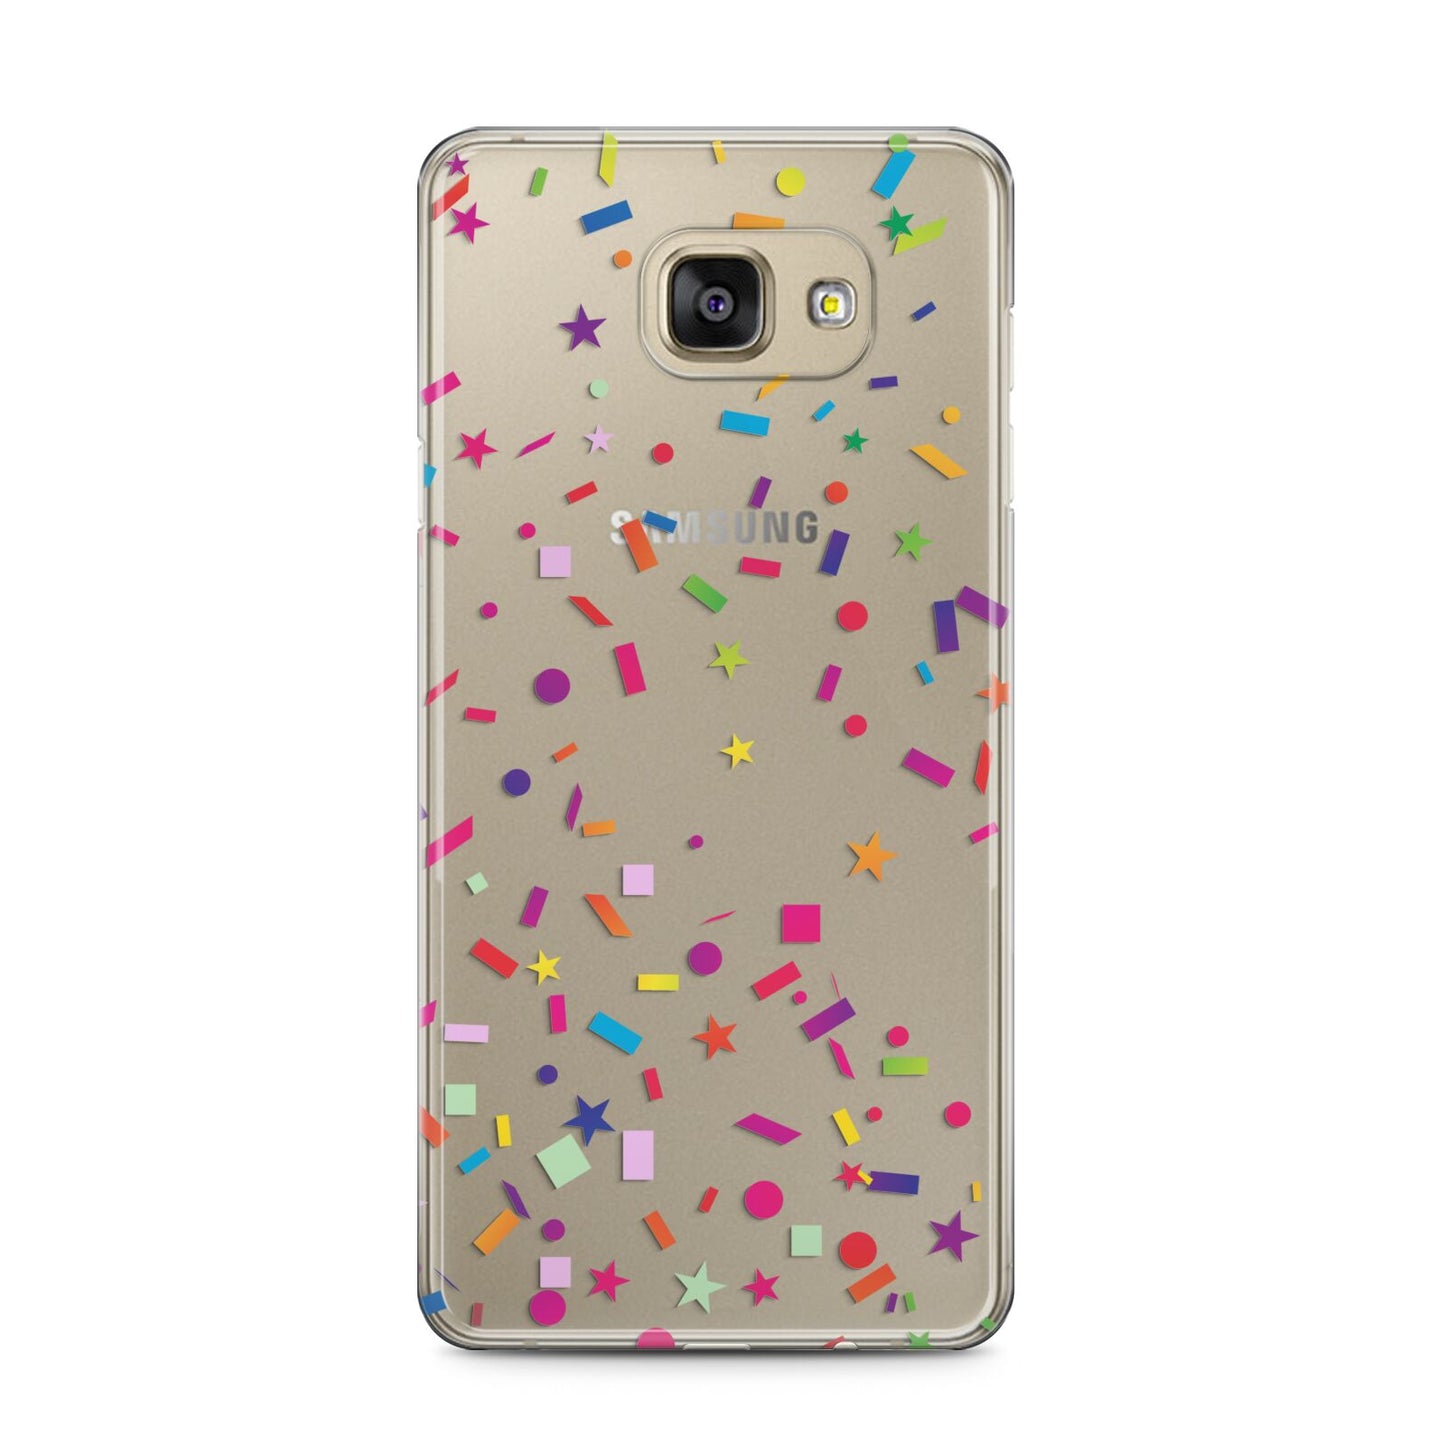 Confetti Samsung Galaxy A5 2016 Case on gold phone